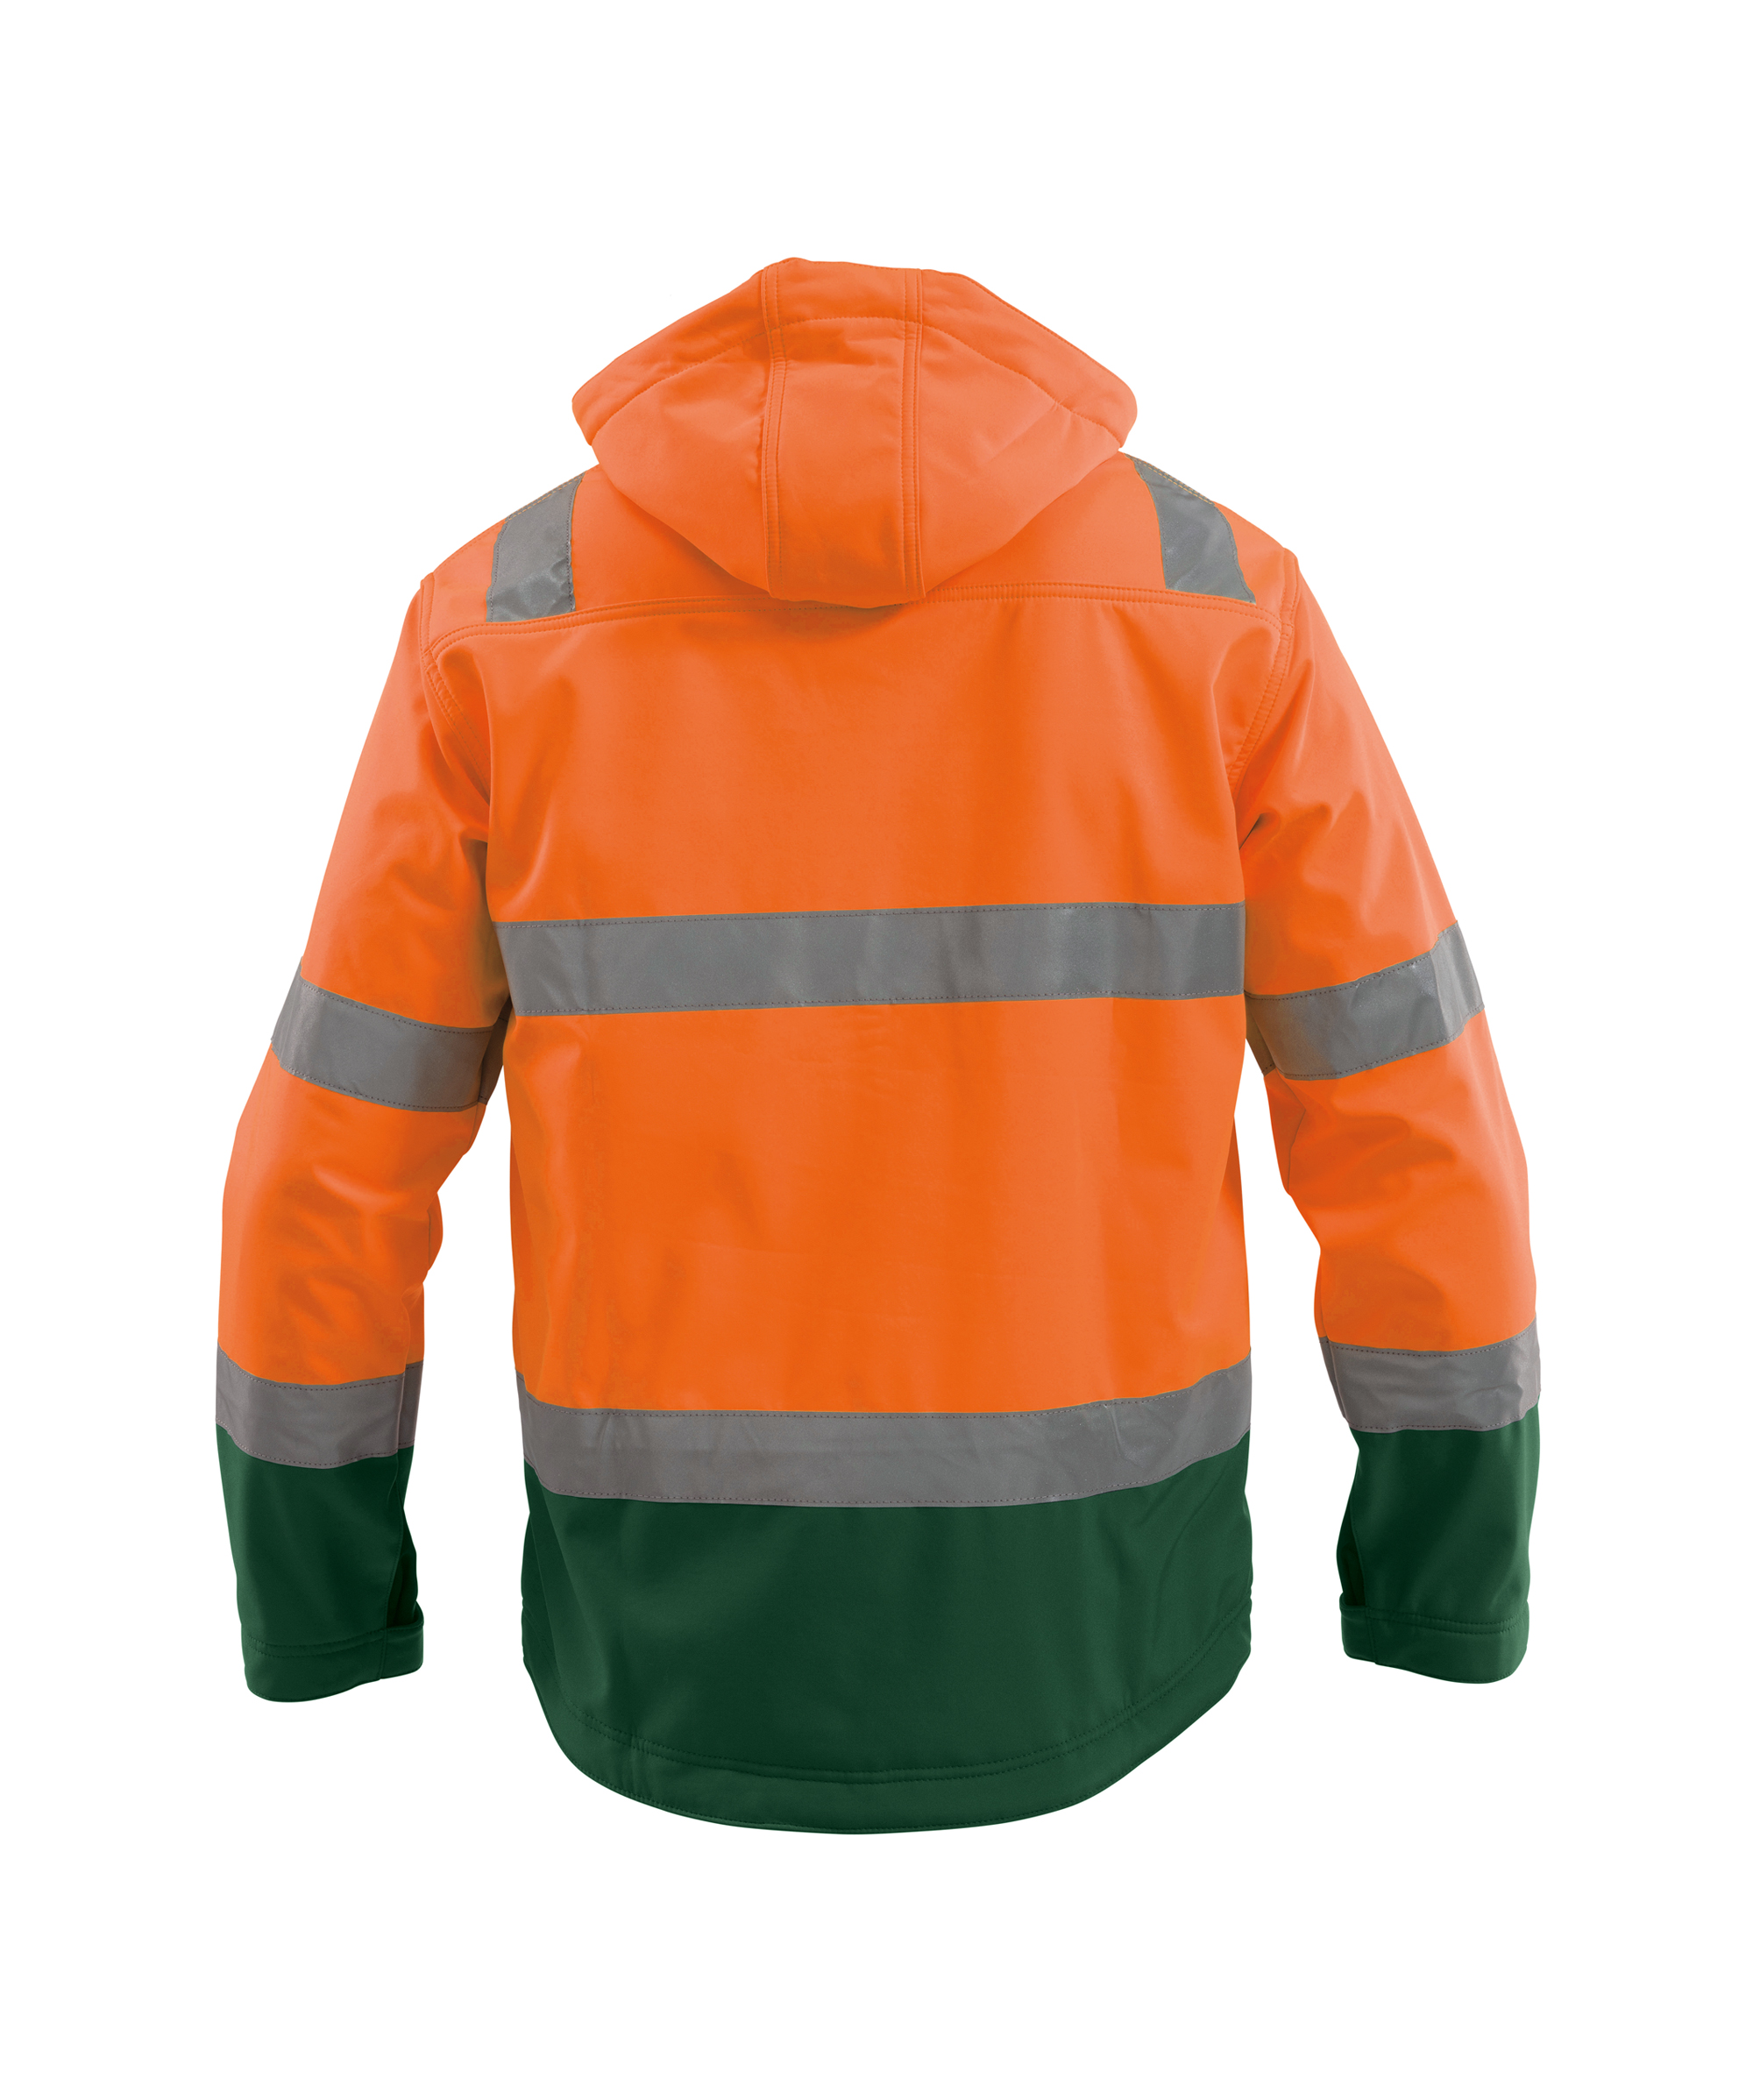 malaga_high-visibility-softshell-work-jacket_fluo-orange-bottle-green_back.jpg